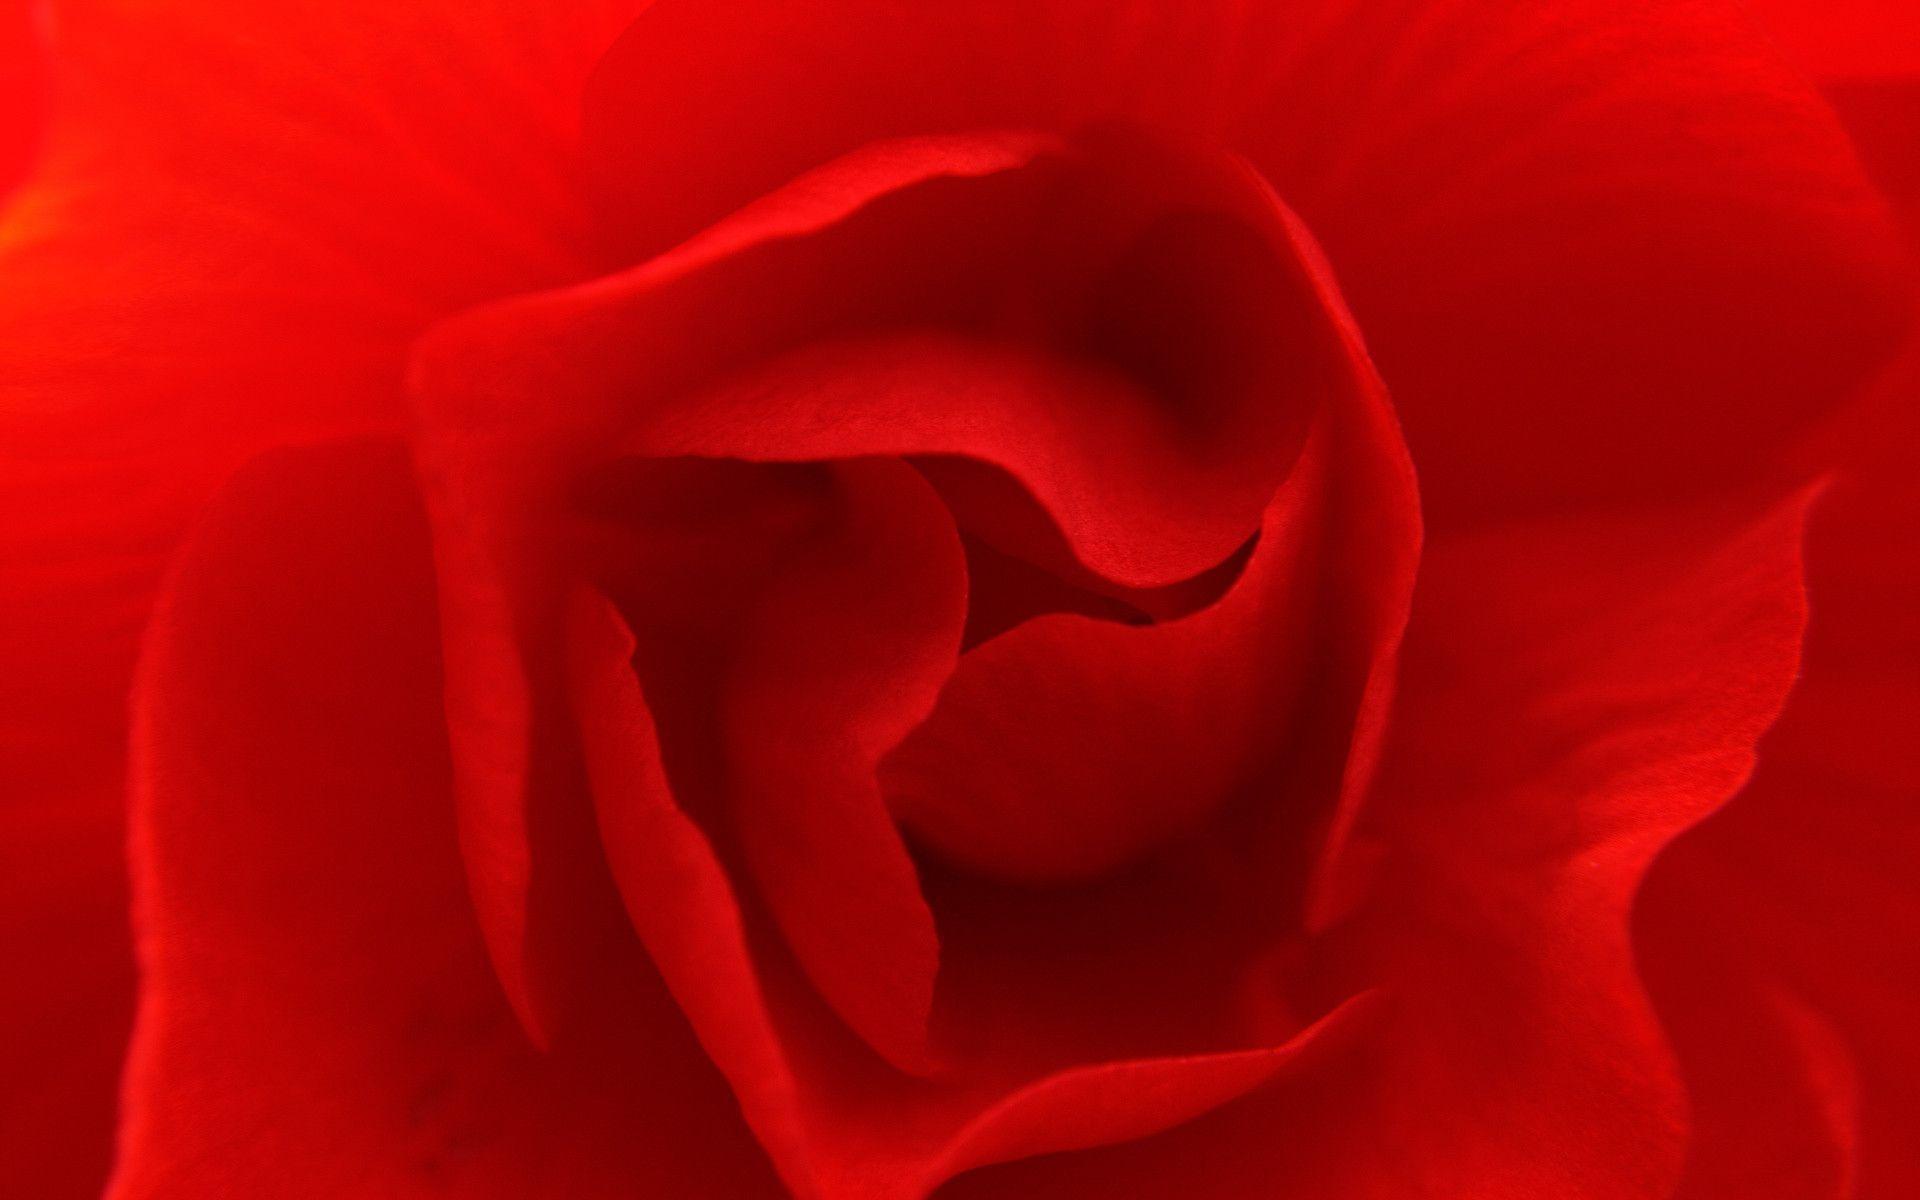 Red Flower Textured Wallpaper 41477 High Resolution. download all